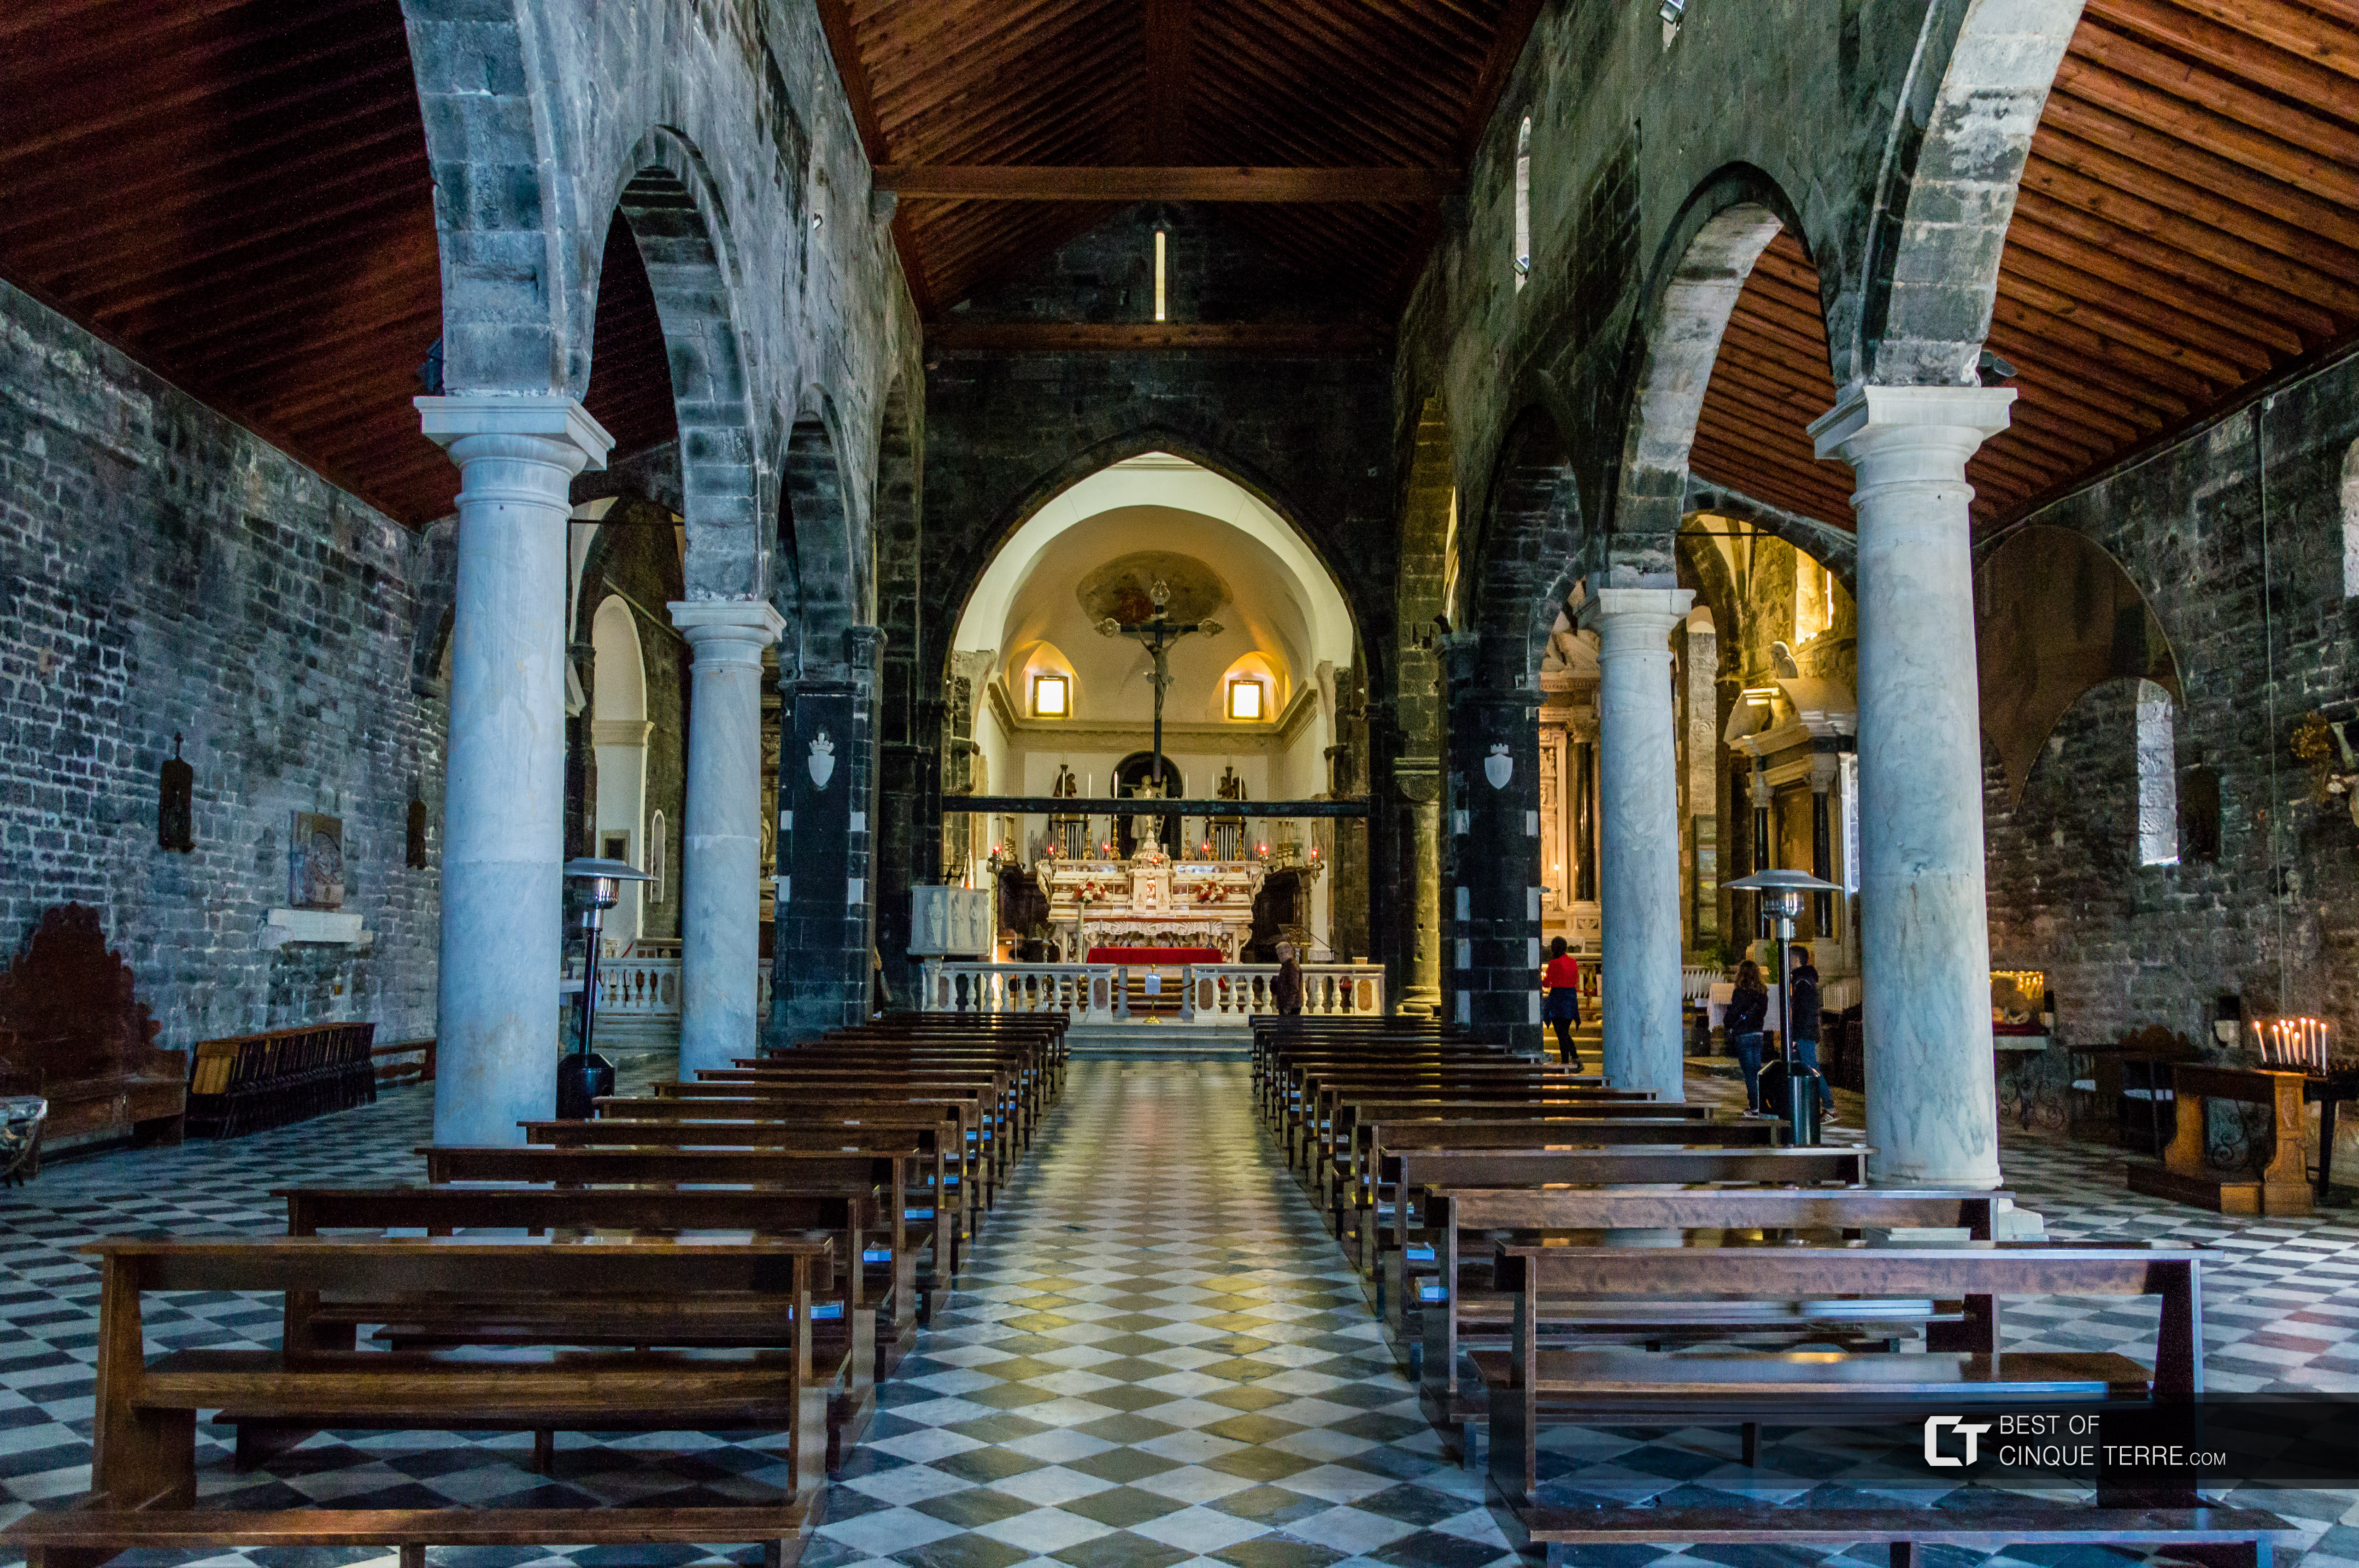 Inside the church of Saint Peter, Portovenere, Italy